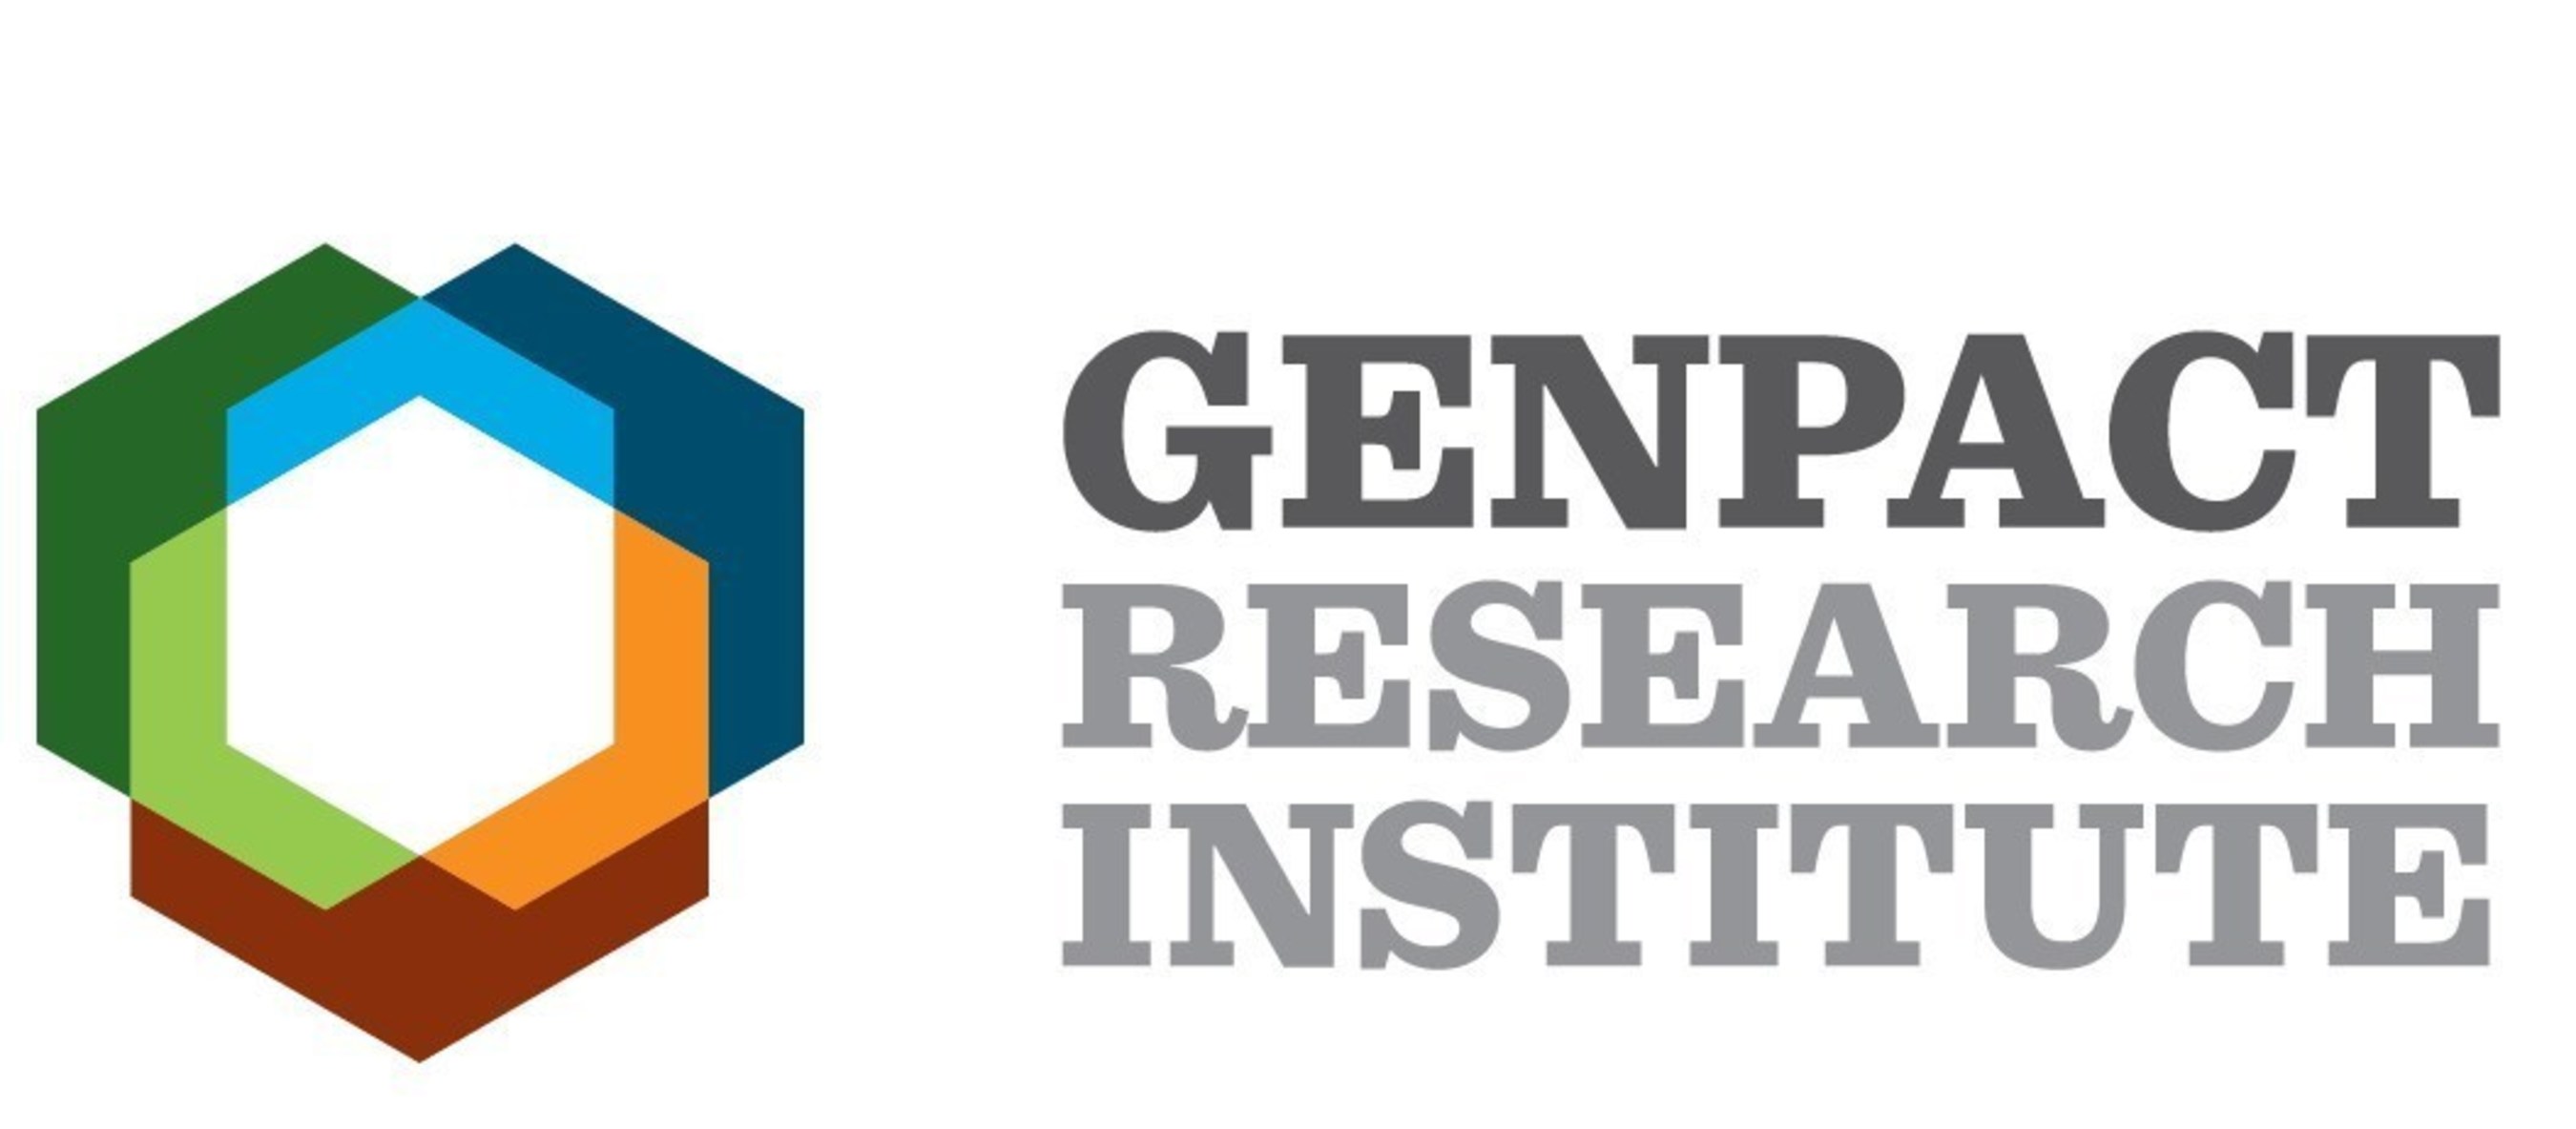 Genpact Research Institute logo